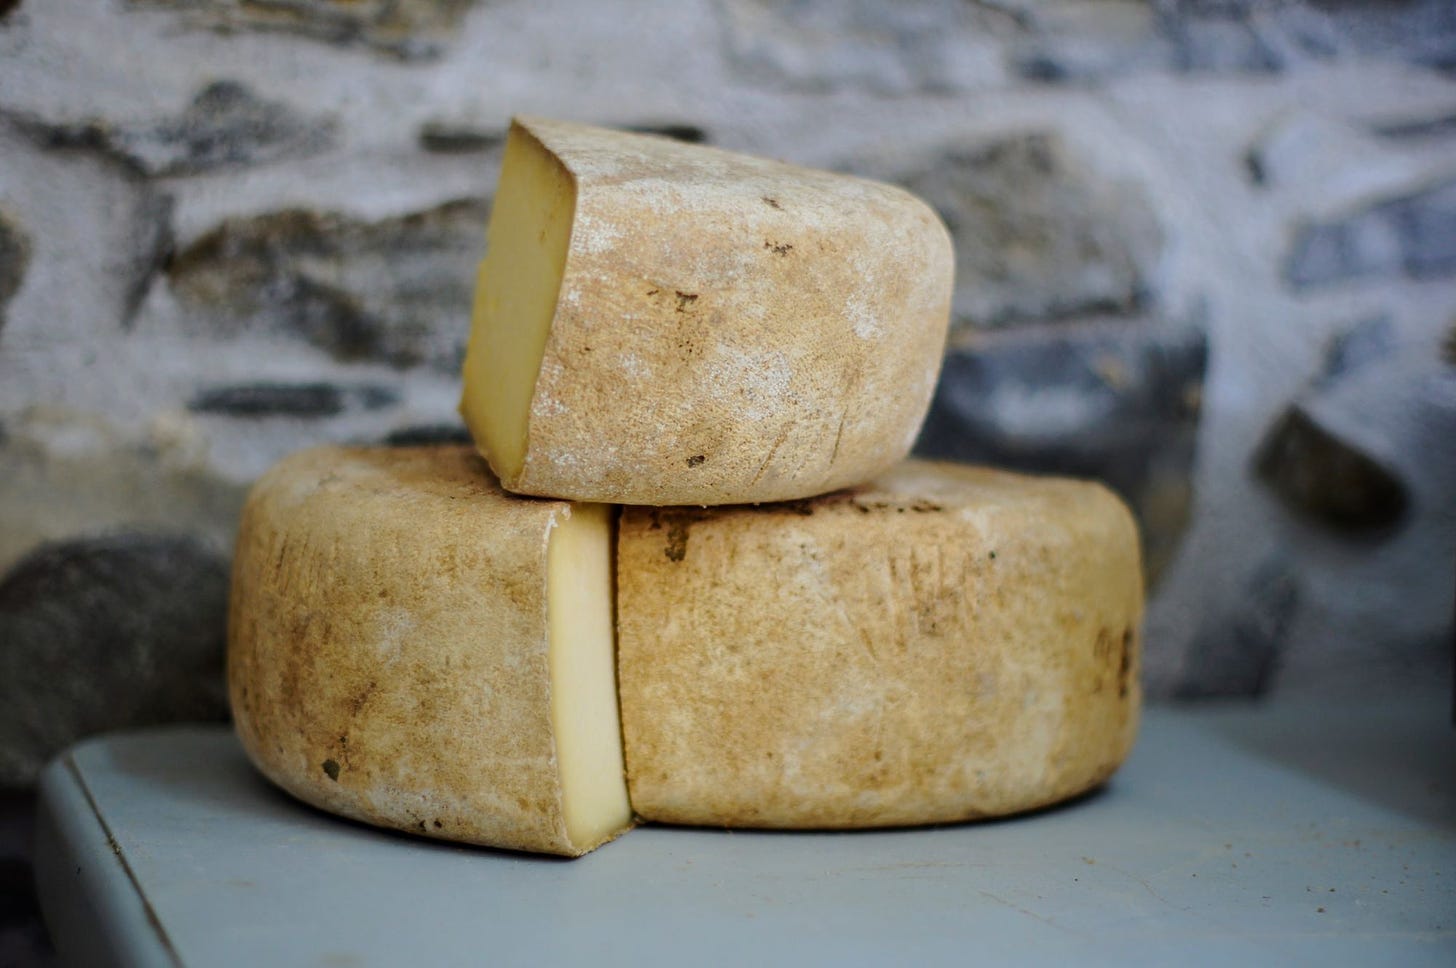 Photo of cheese via Alexander Maasch of Unsplash.